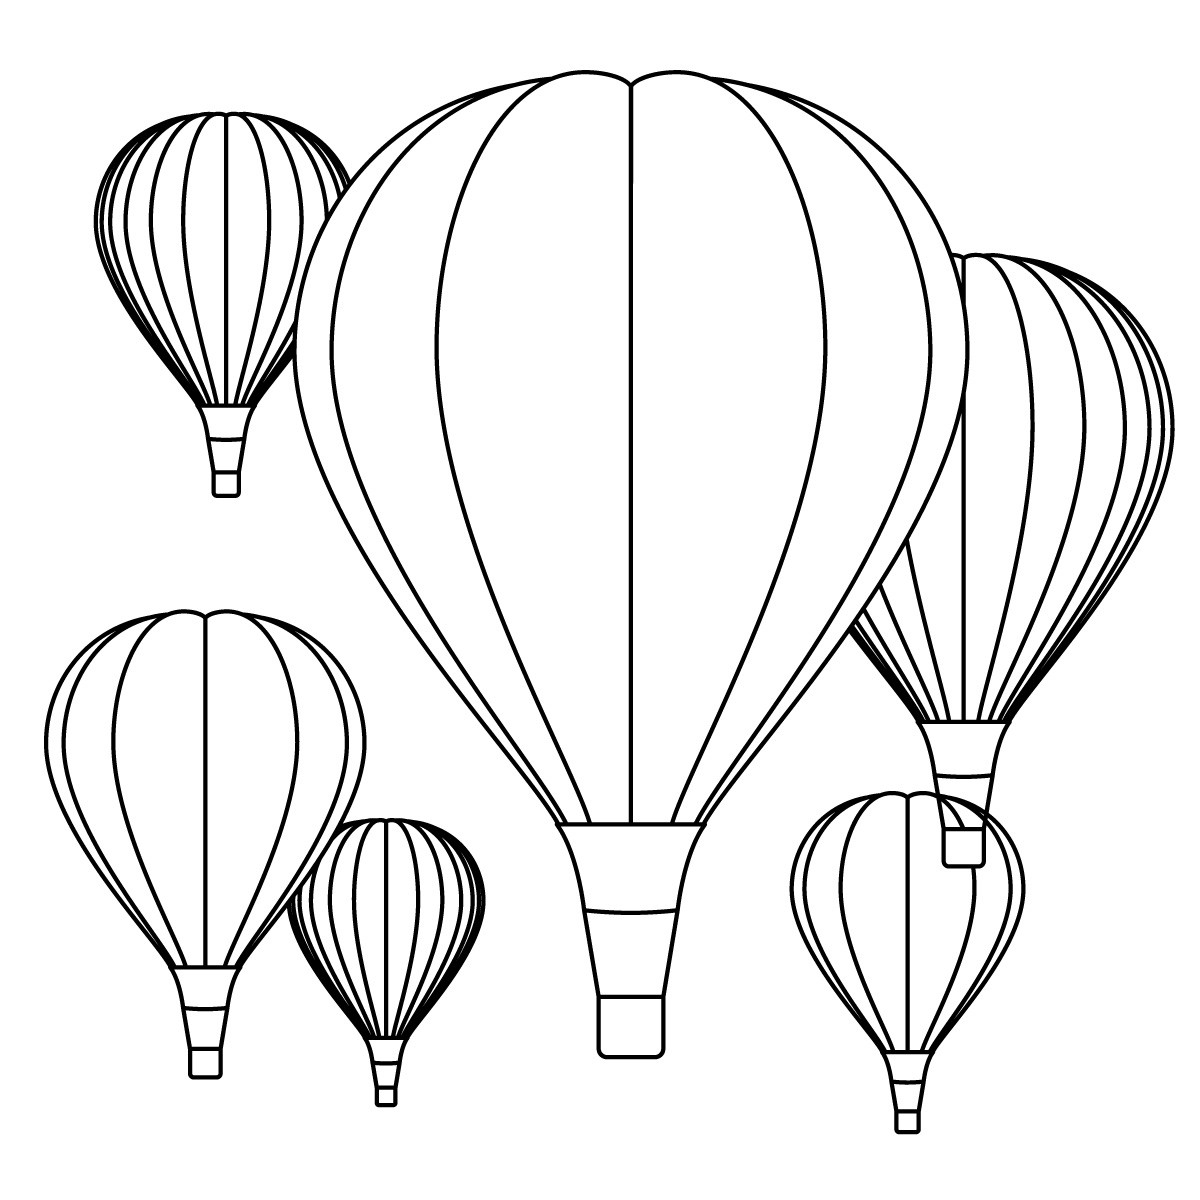 Kumpulan Gambar Sketsa Balon Udara Hd